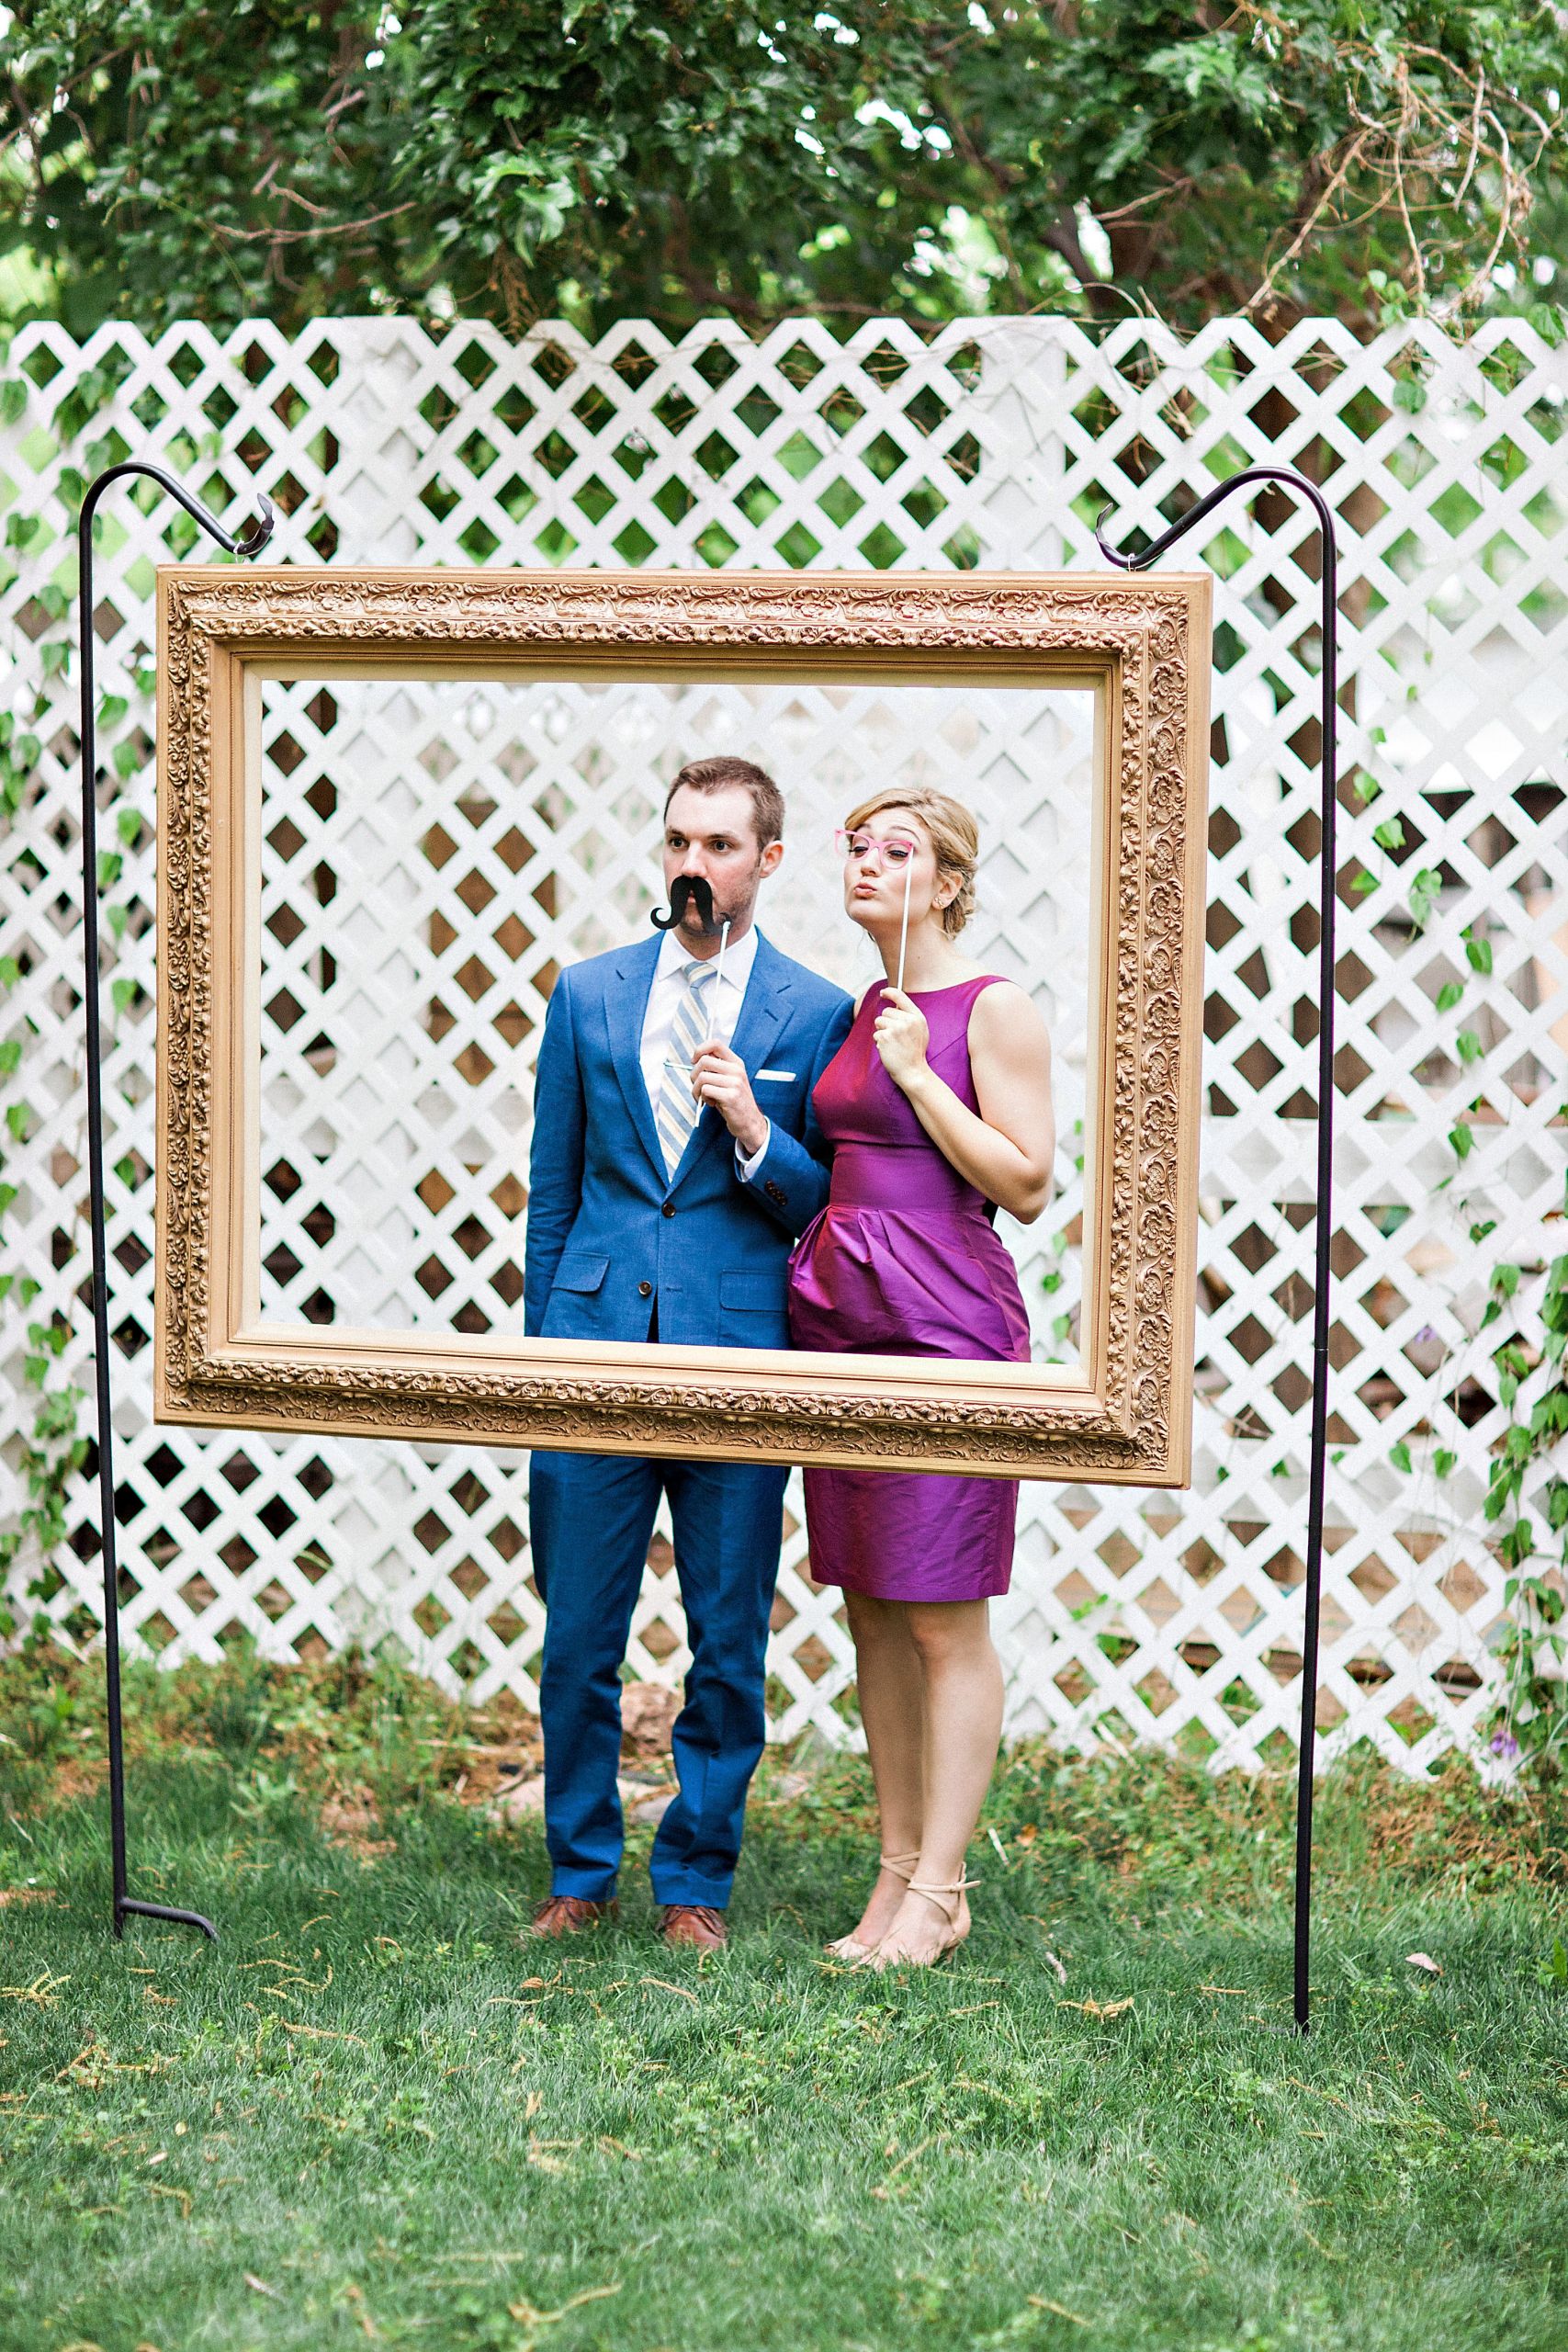 DIY Wedding Photobooth
 DIY Hanging Frame Wedding Booth